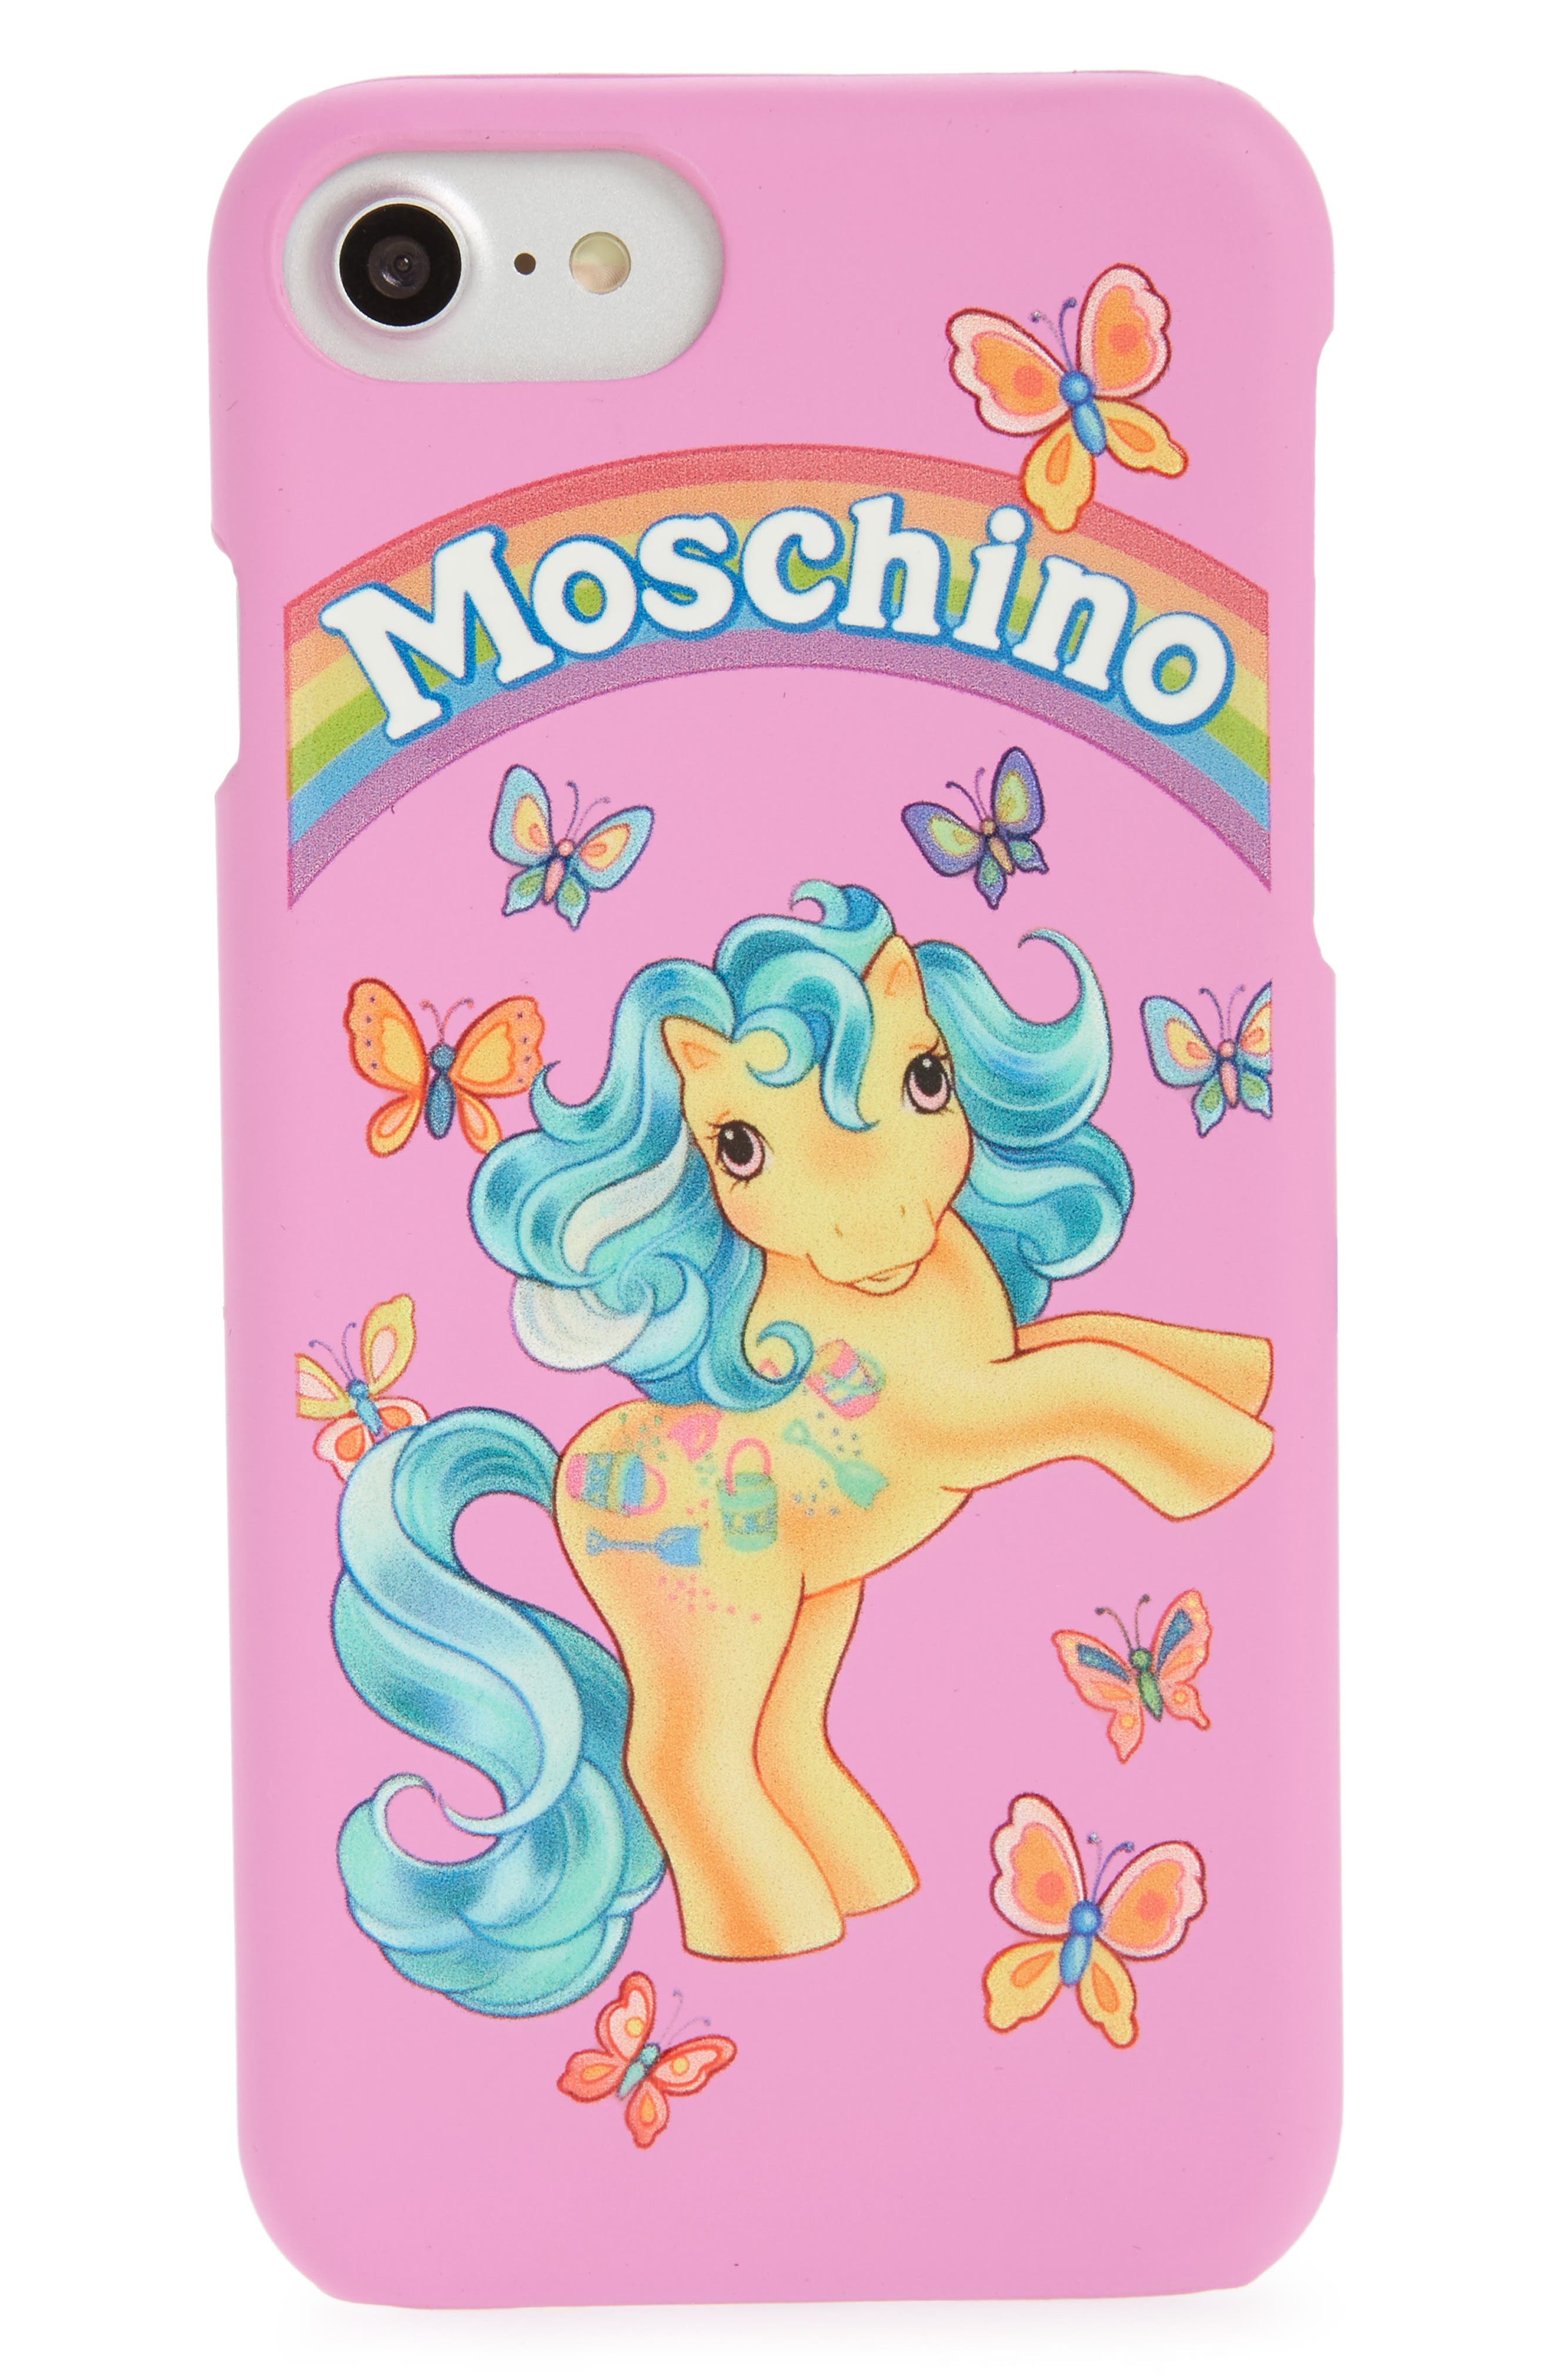 Moschino x My Little Pony iPhone 6/6s 